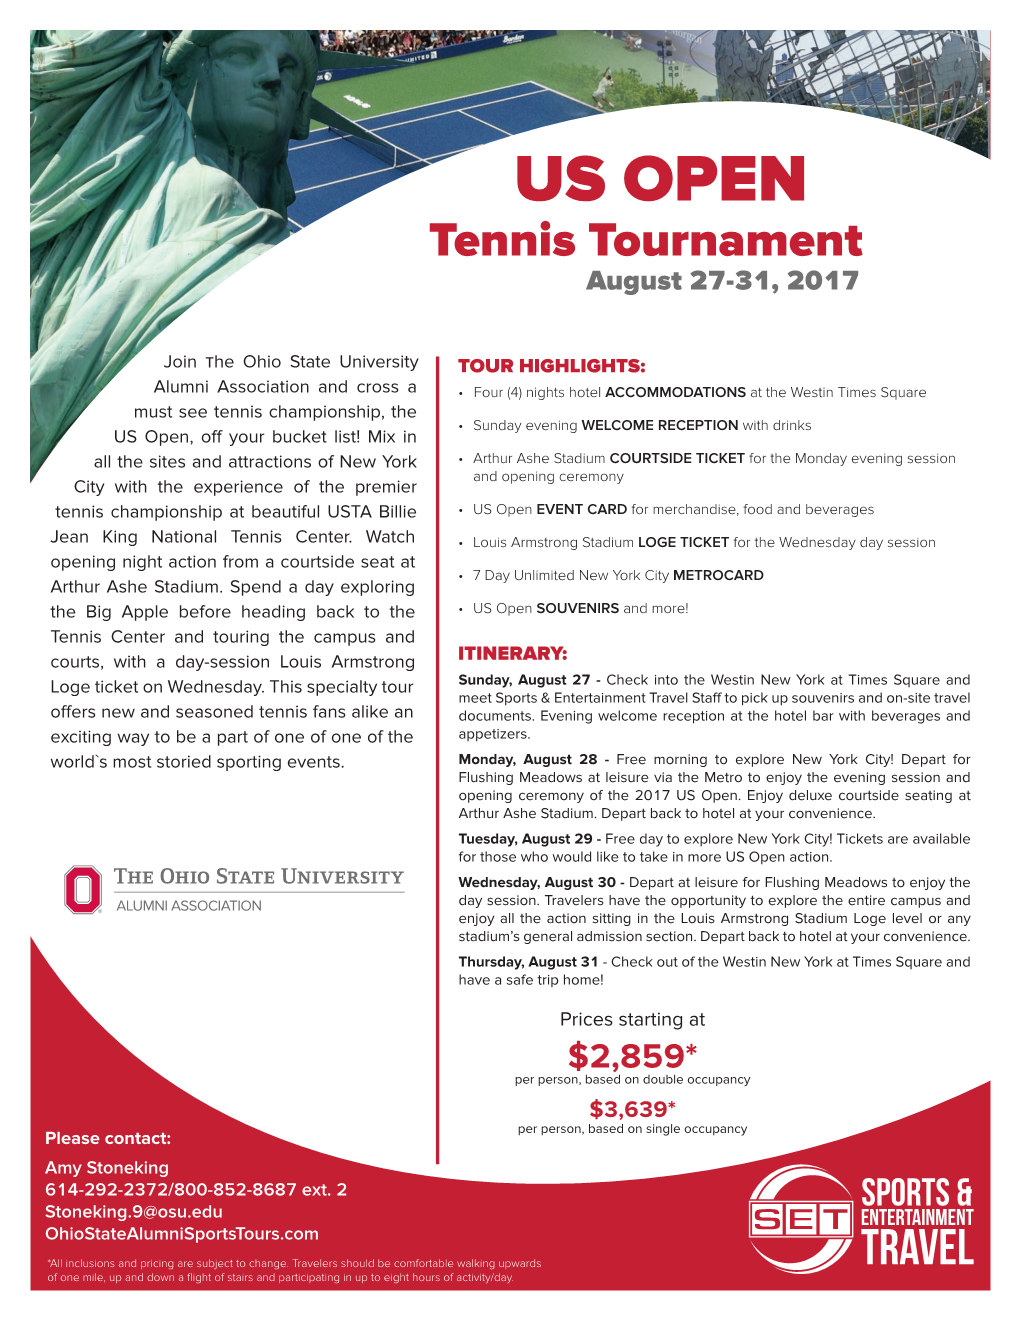 US OPEN Tennis Tournament August 27-31, 2017